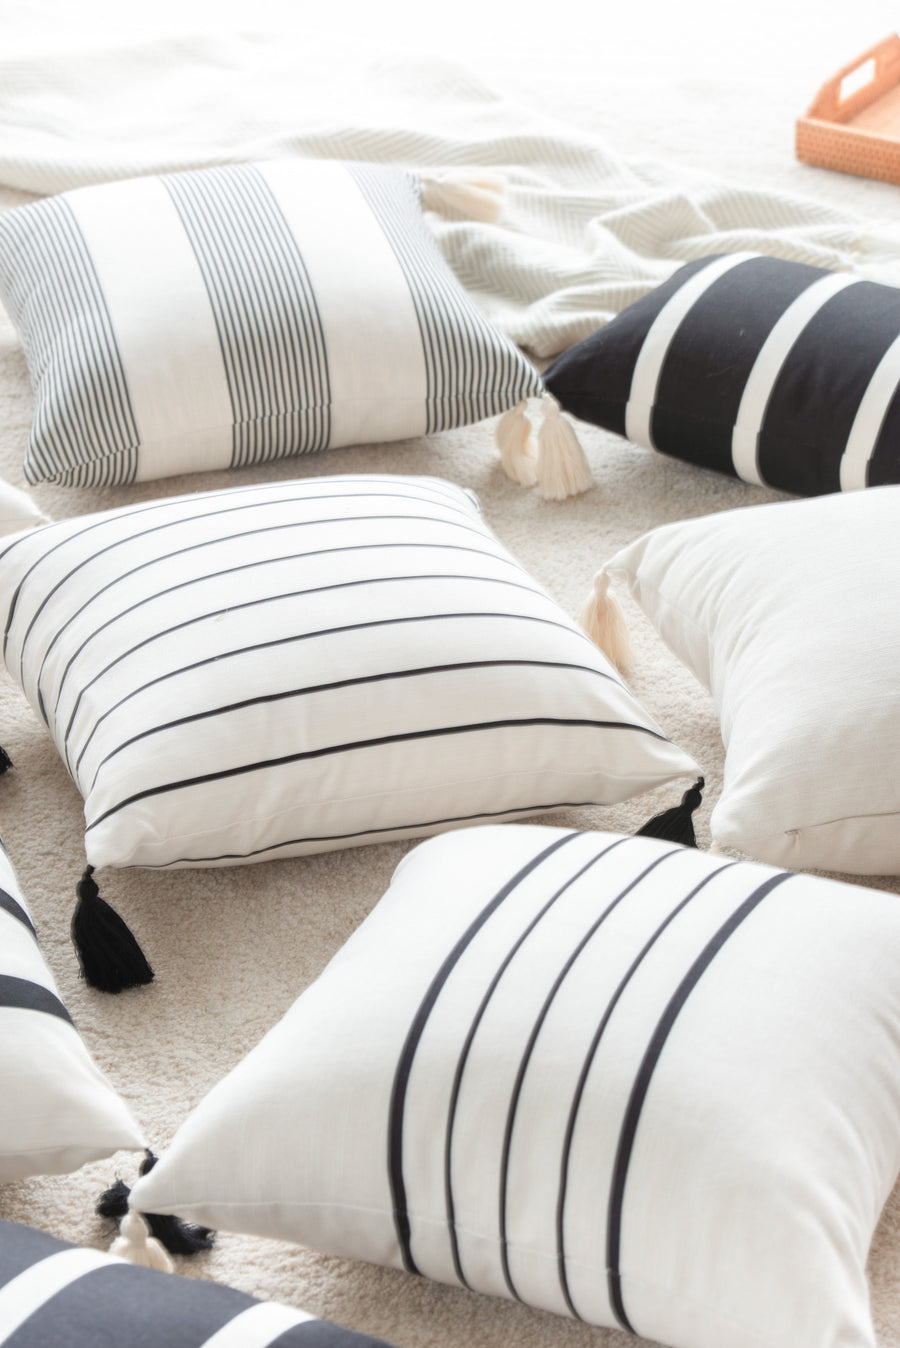 Moroccan Tassel Neutral Pillow Cover, Geo Stripes, Beige Black, 18